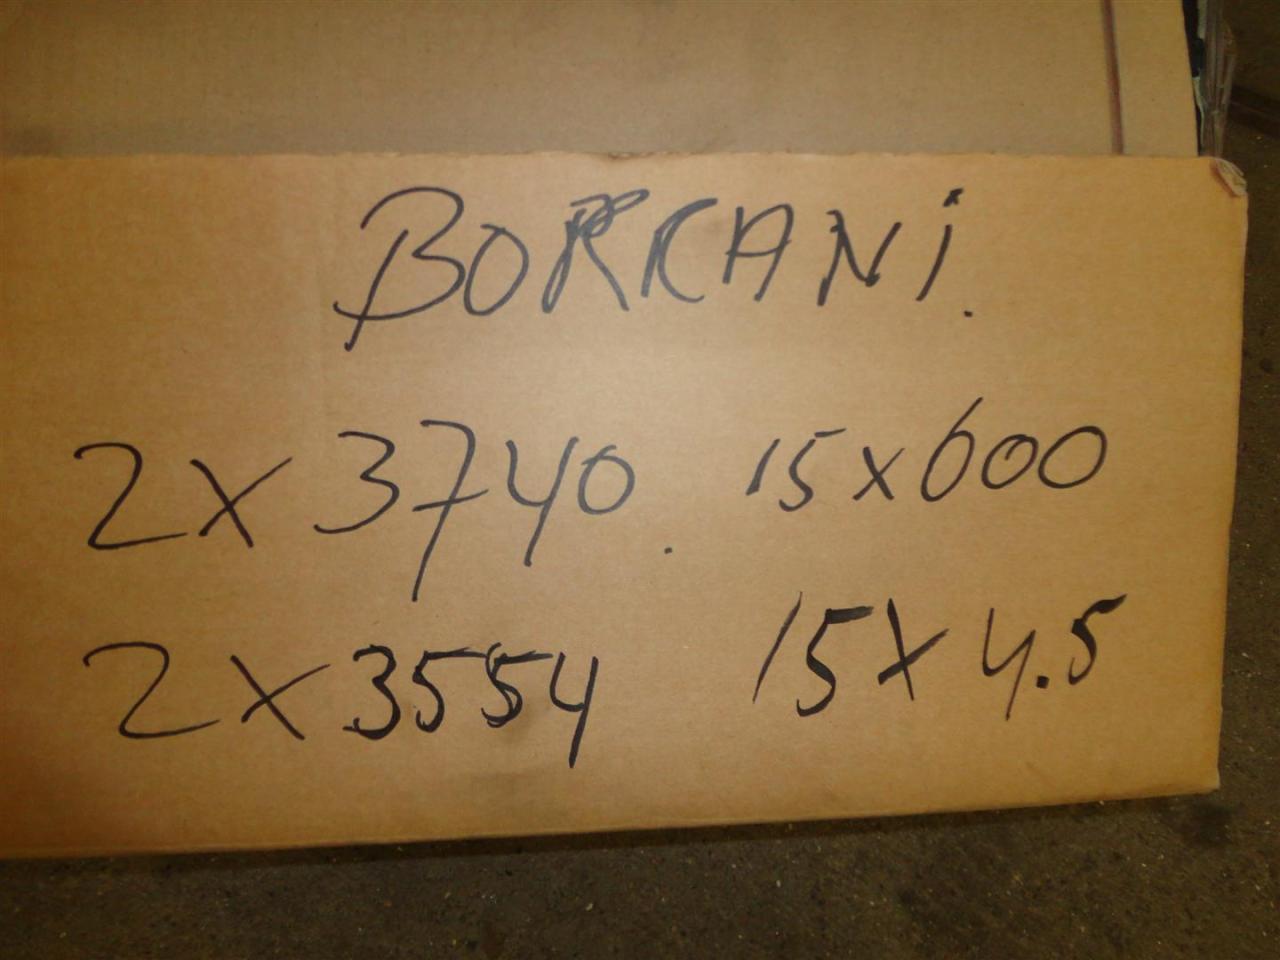 1900 Borrani 15 inch #3740 &amp; 3554